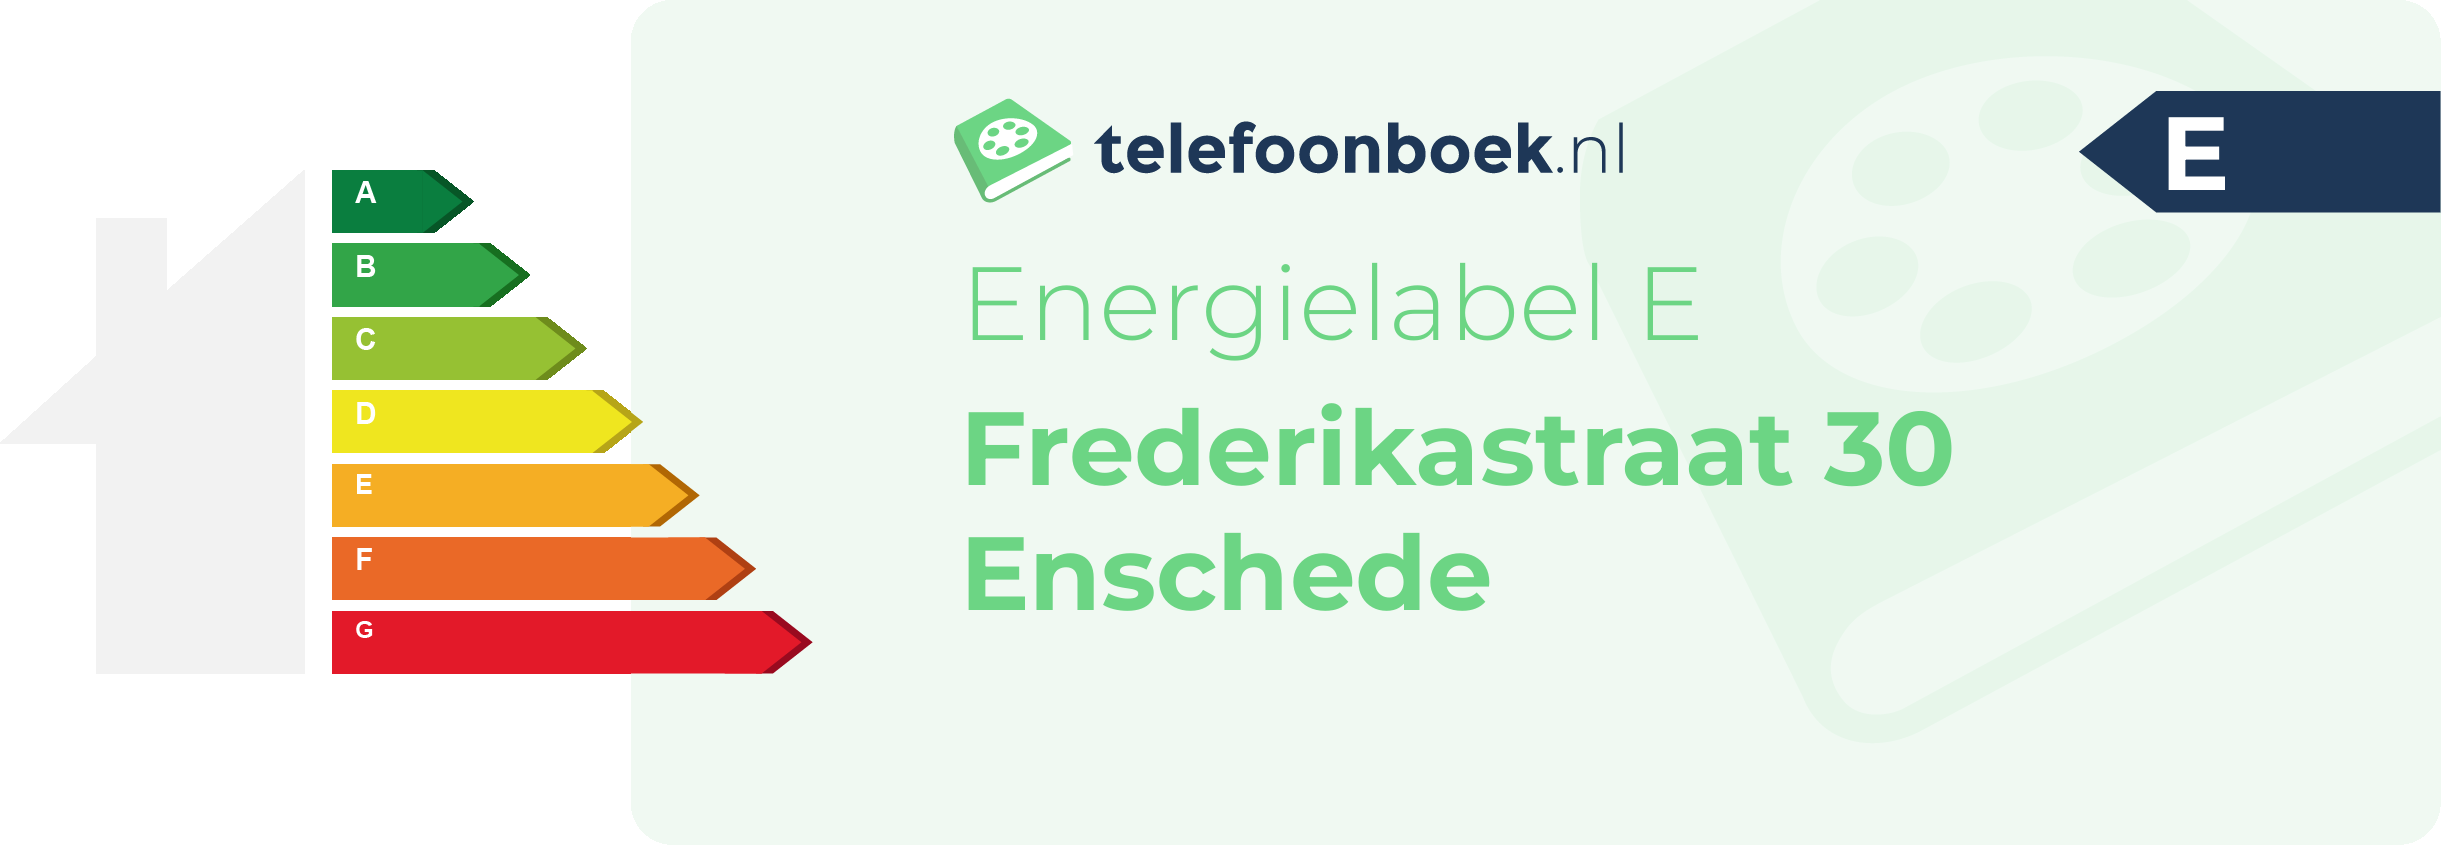 Energielabel Frederikastraat 30 Enschede